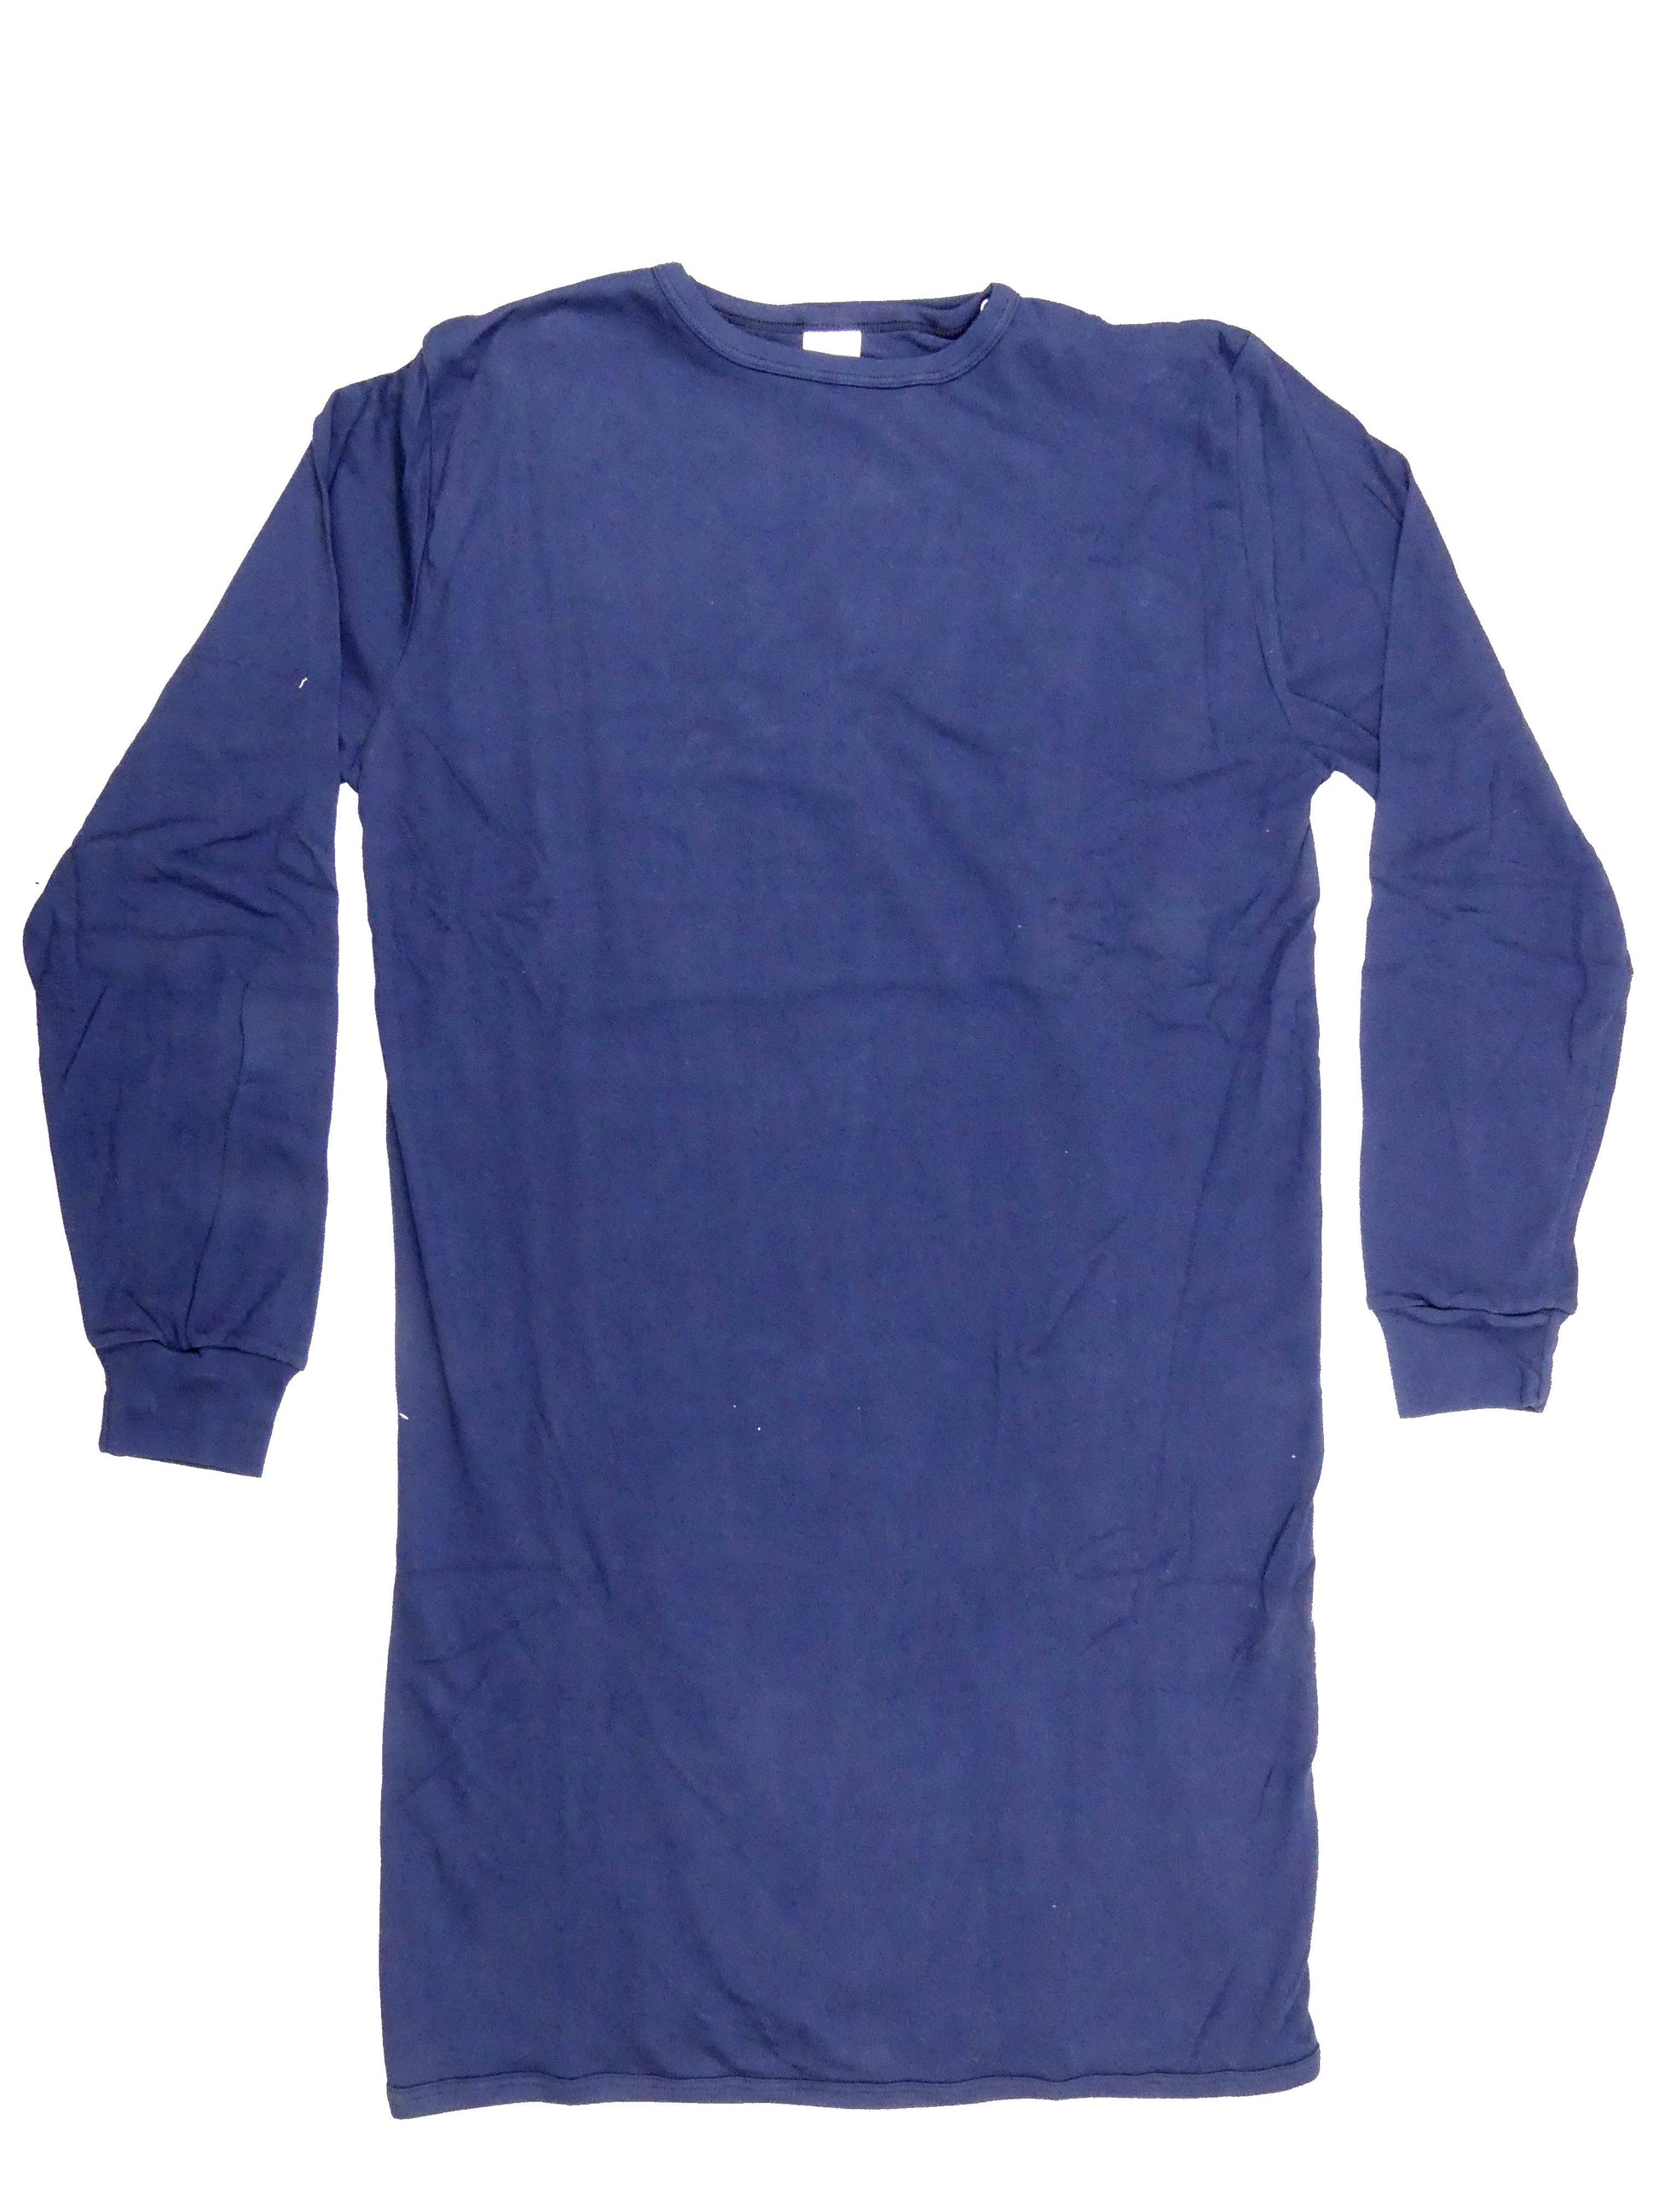 Men's Adaptive Nightwear: 100% Interlock Cotton Completely Open Back Nightshirt with Long Sleeves - M139 - MEDORIS